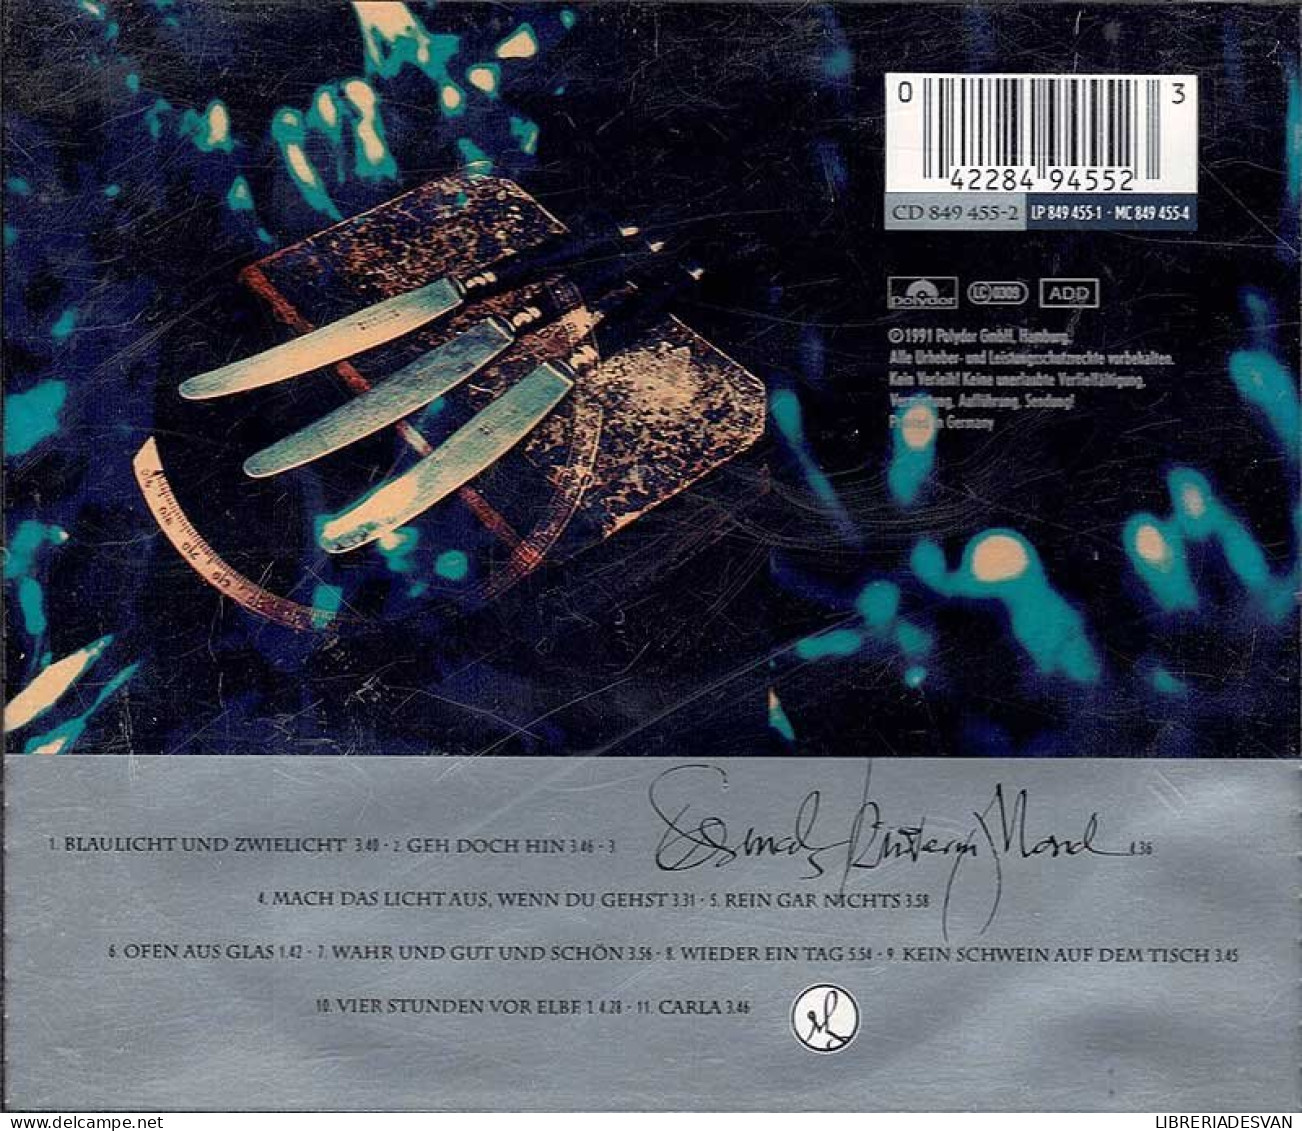 Element Of Crime - Damals Hinterm Mond. CD - Rock